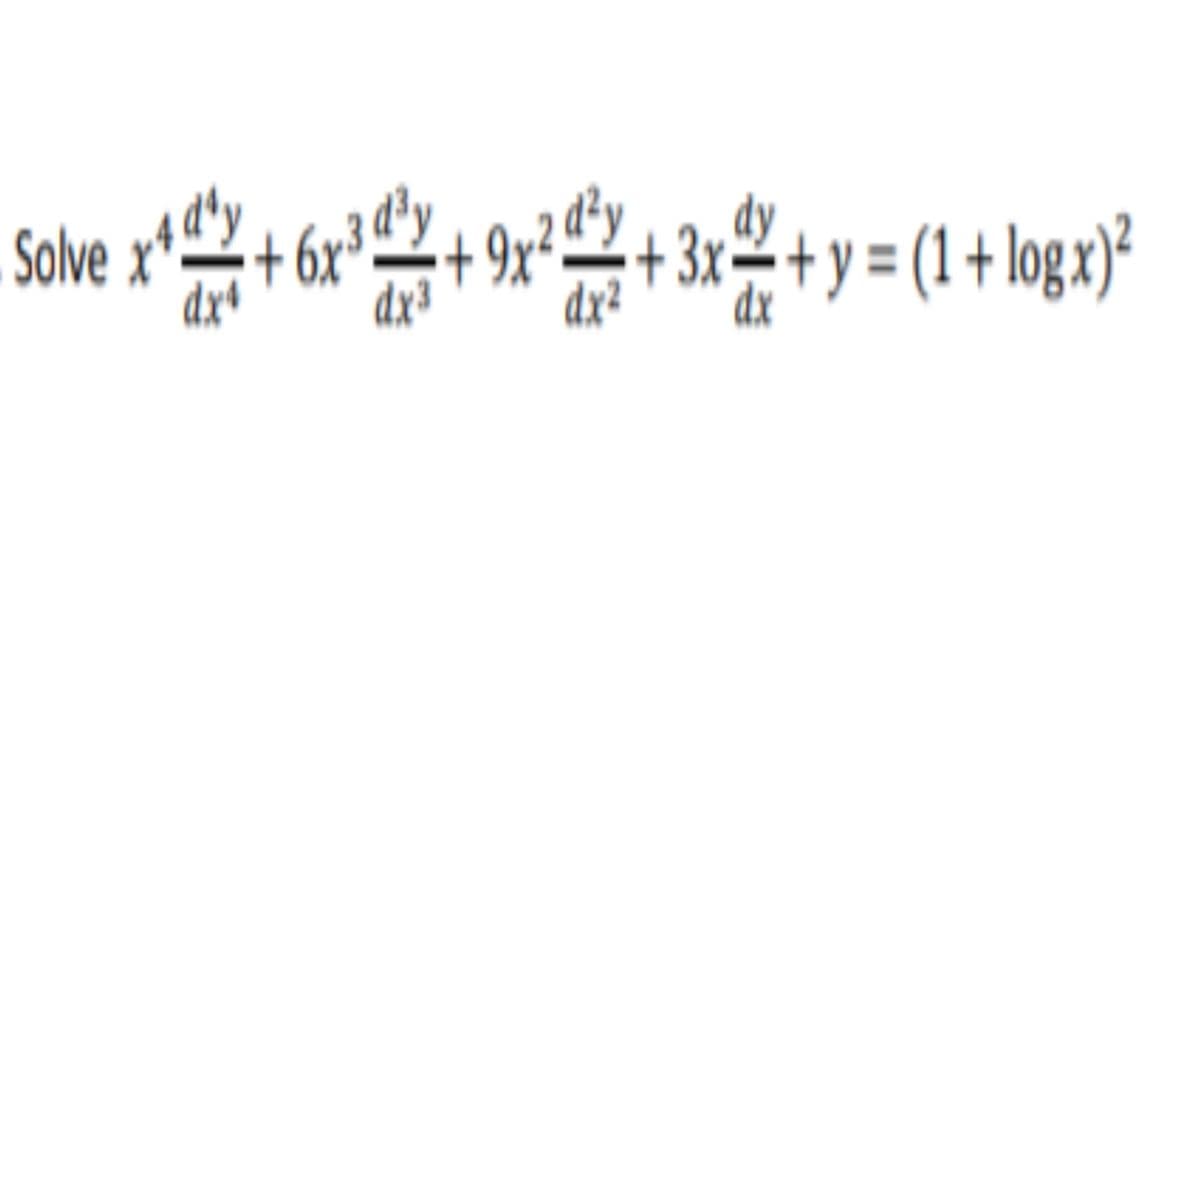 Solve
x*:
+3x=+y = (1+ logx)²
dxª
dx³
dx?
